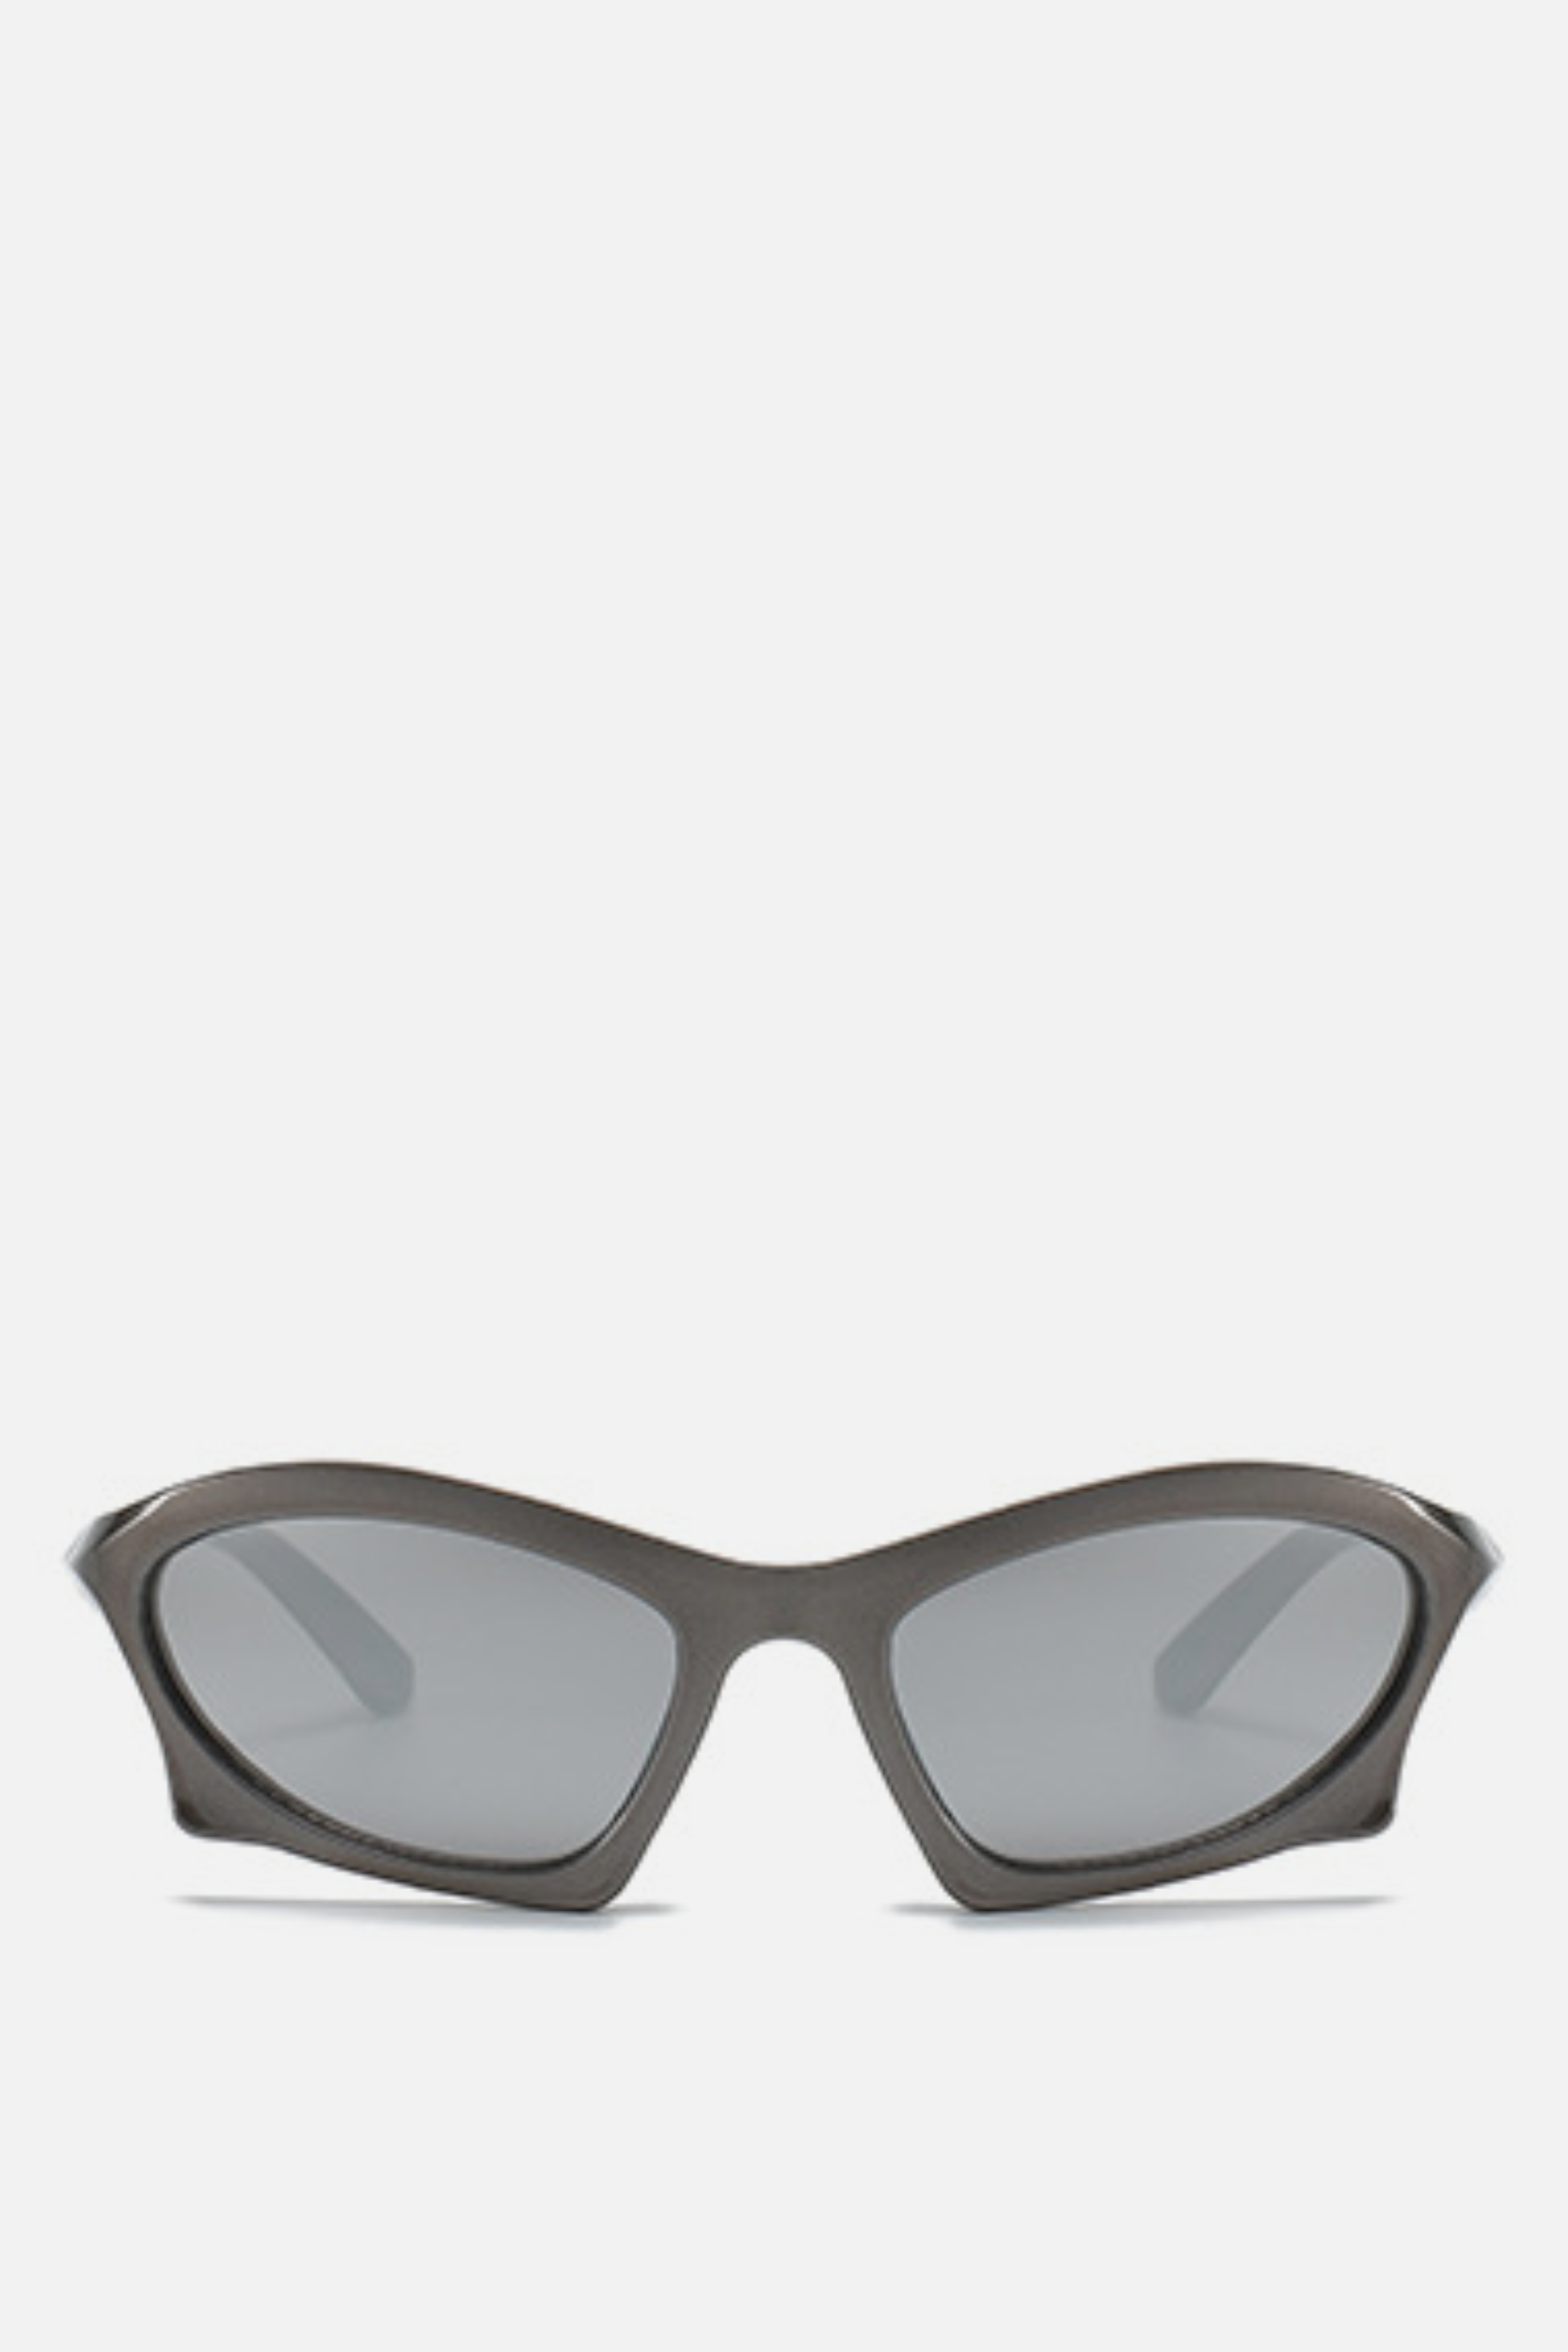 CALI Grey Cat Eye Sunglasses